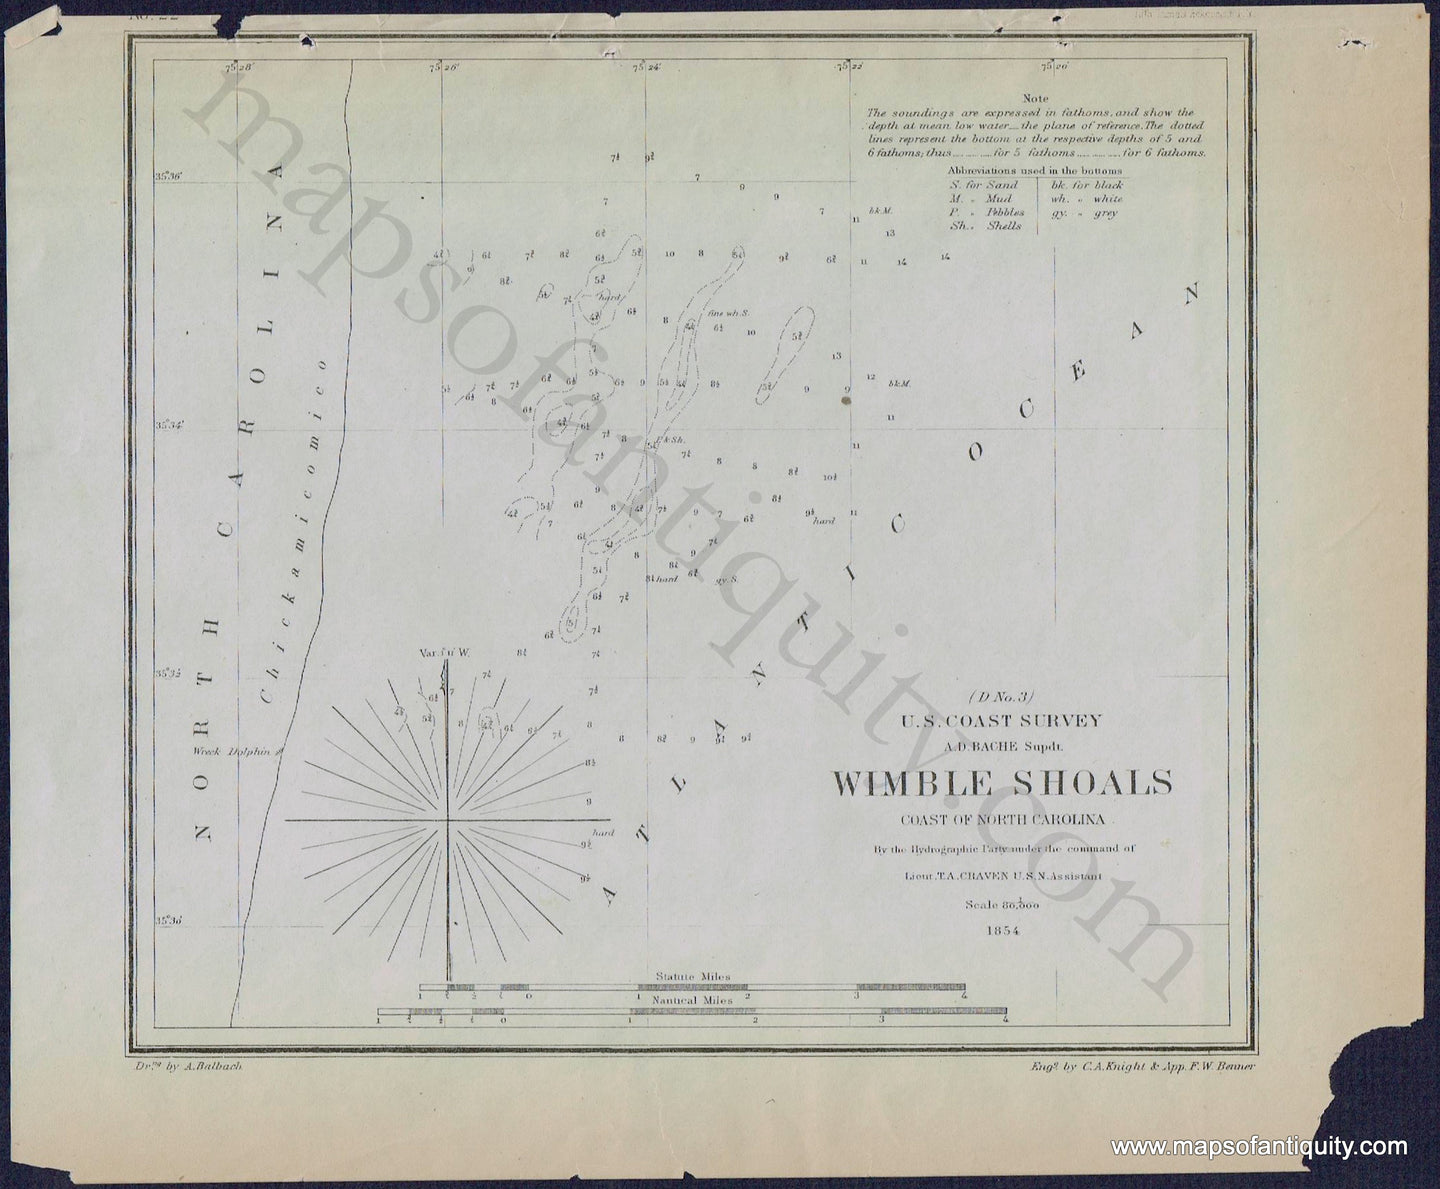 Antique-Black-and-White-Coast-Survey-Wimble-Shoals-Coast-of-North-Carolina-1854-USCS-South-North-Carolina-1800s-19th-century-Maps-of-Antiquity